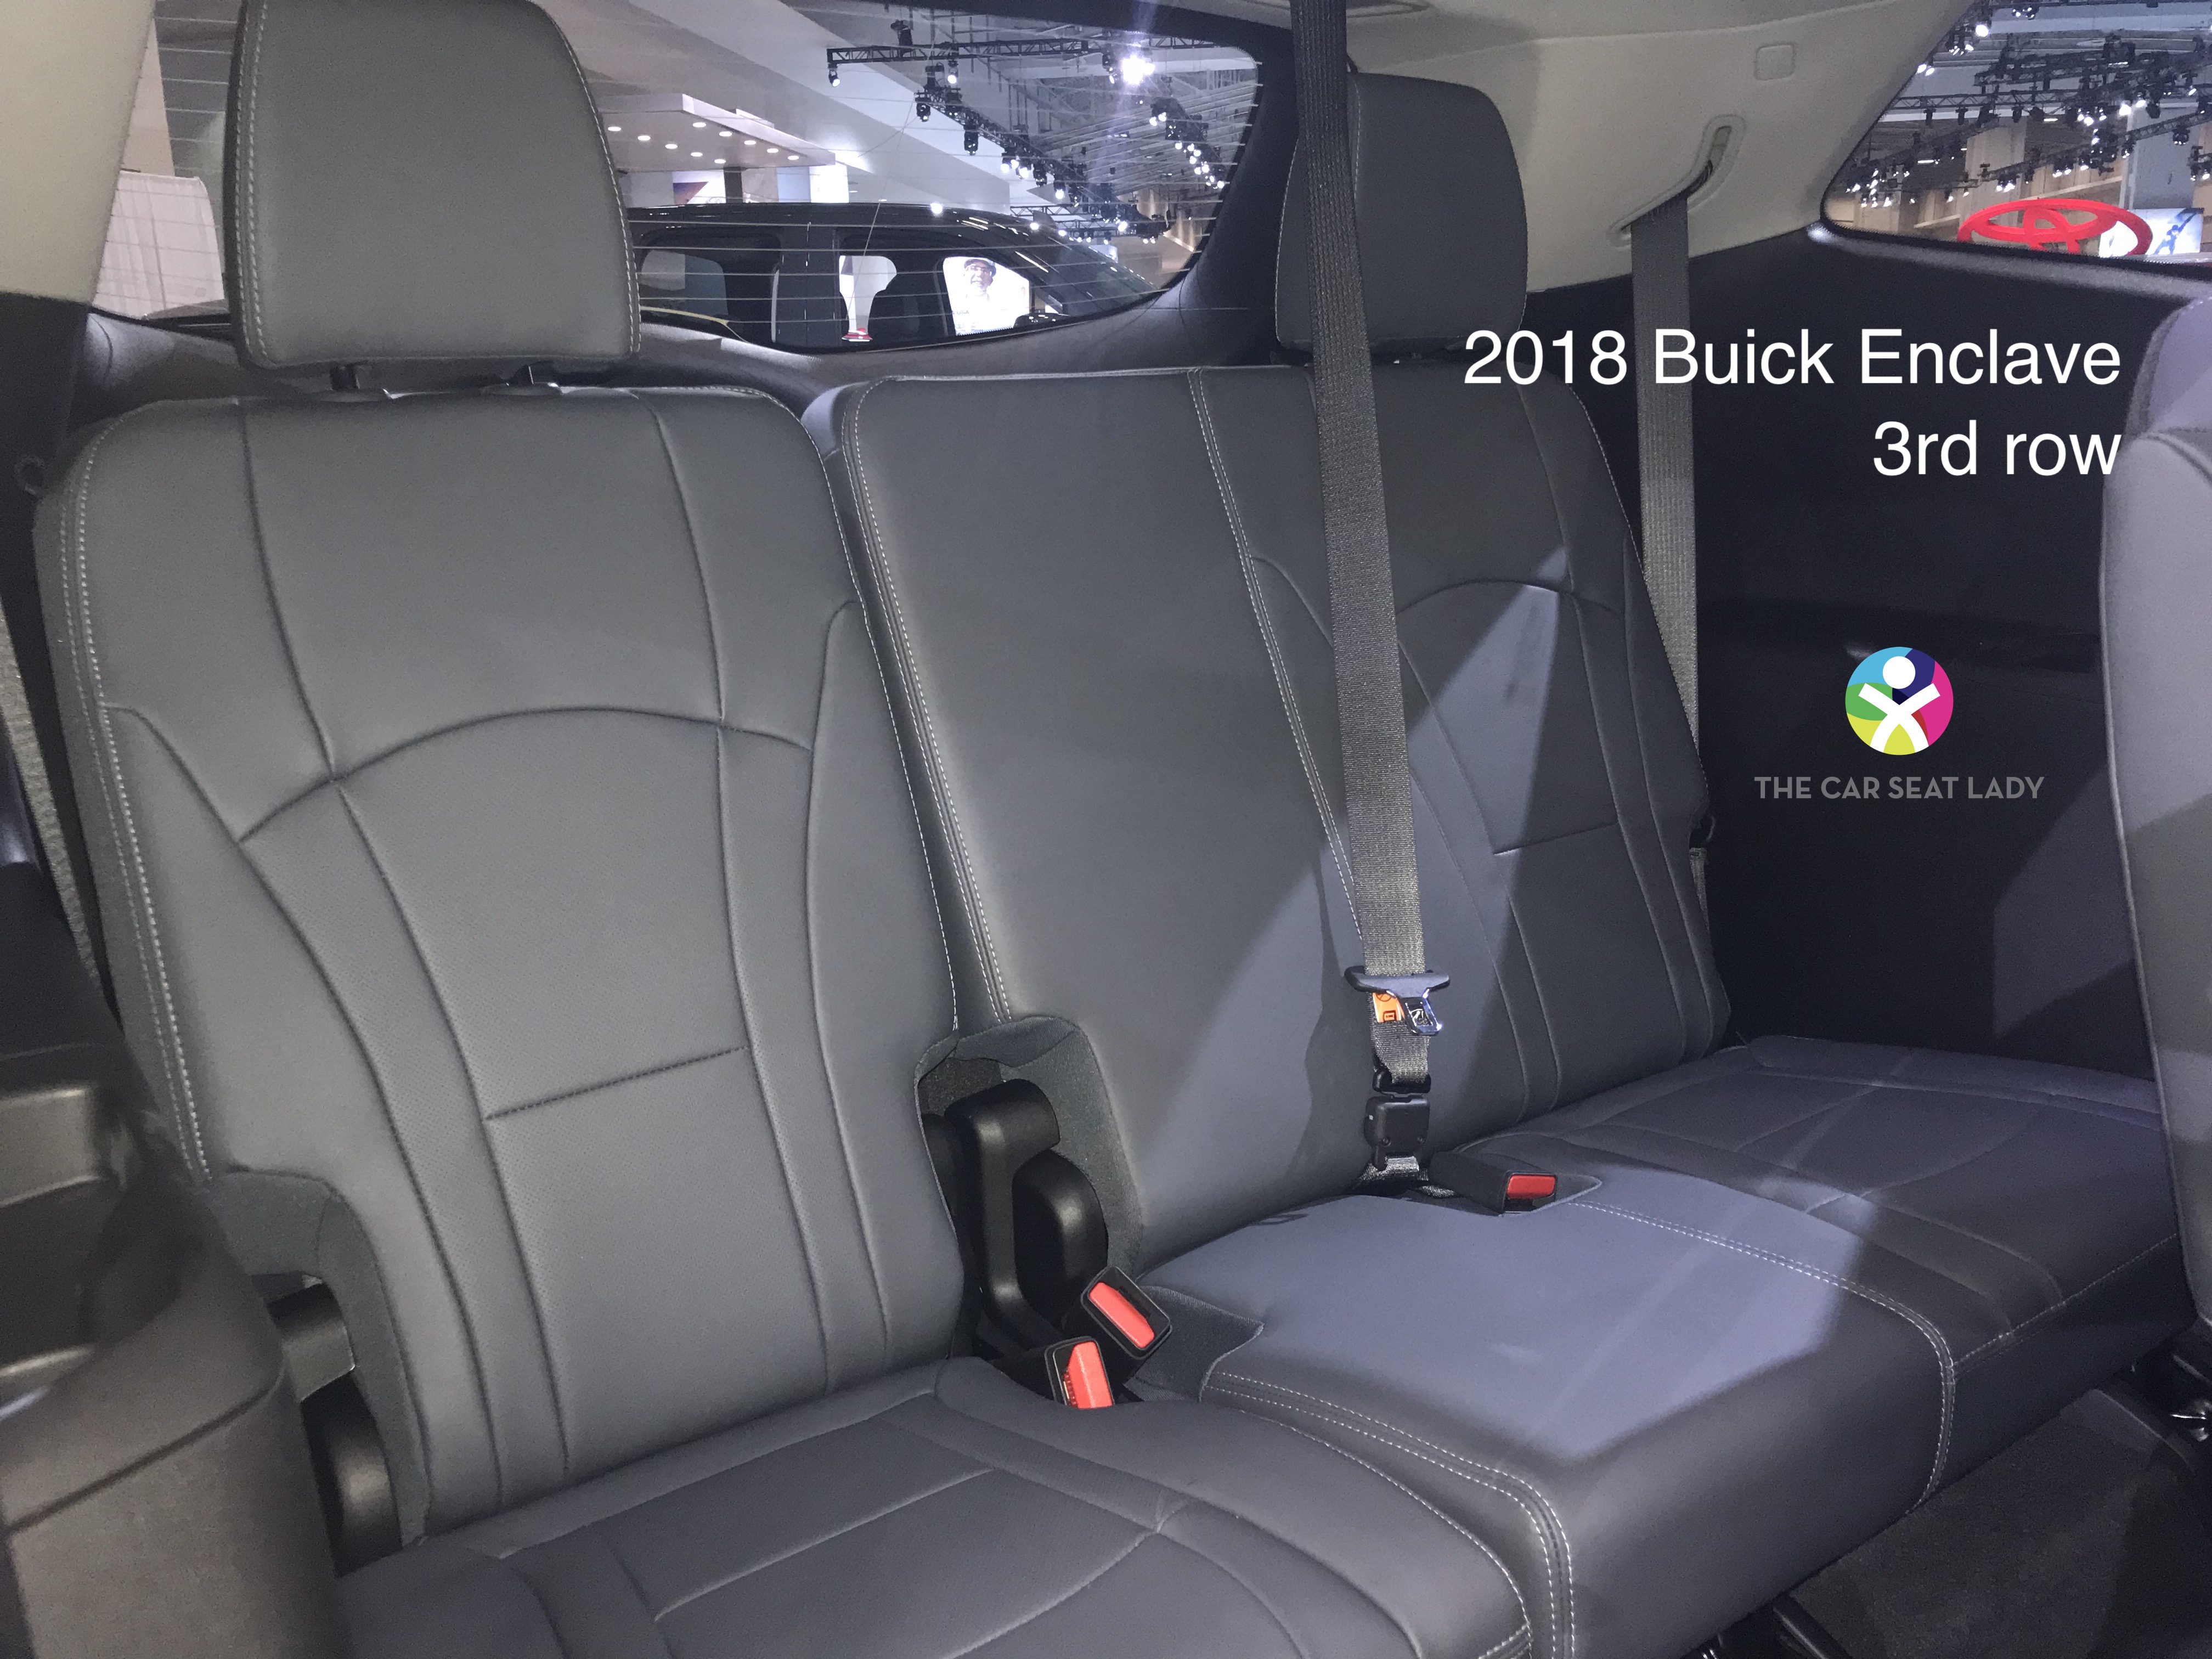 Buick Enclave exterior photo